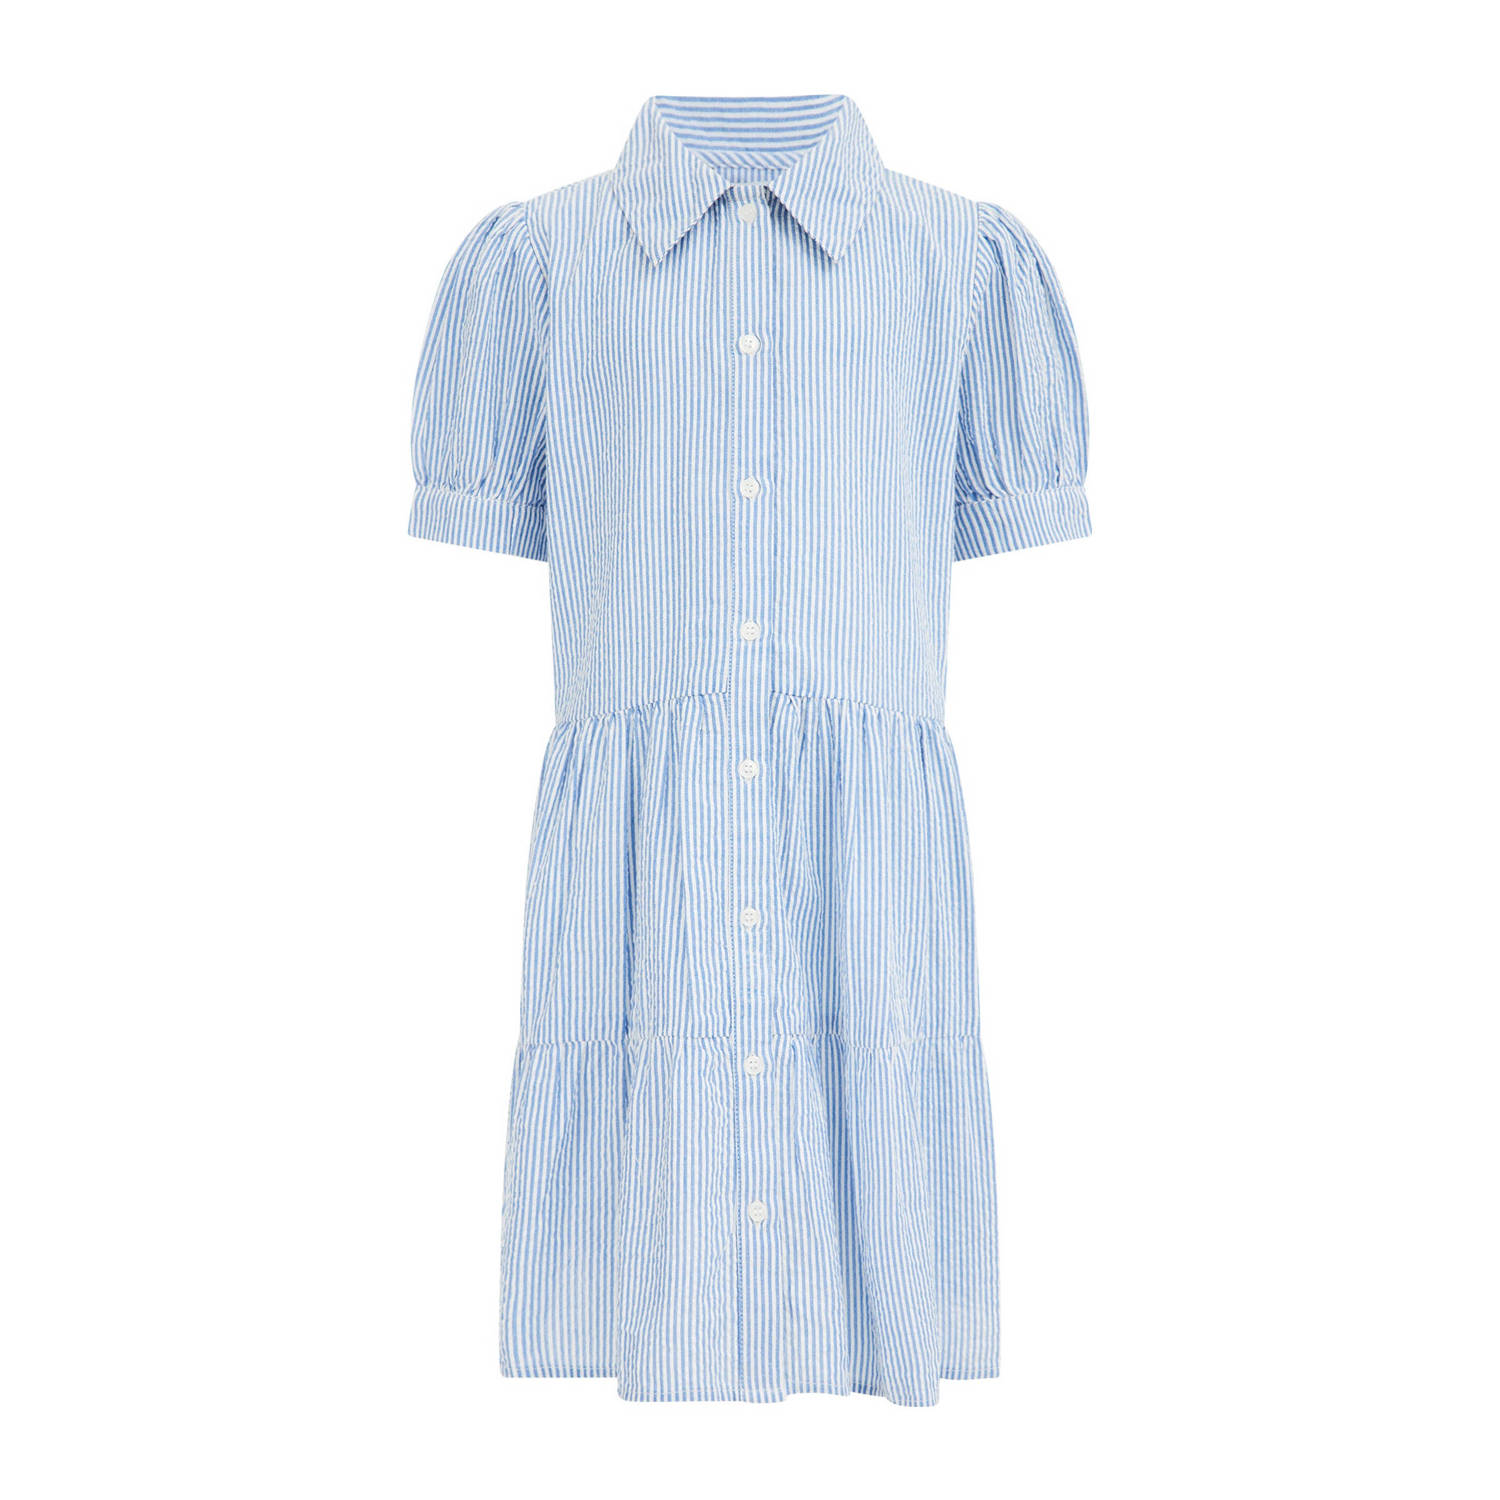 WE Fashion gestreepte jurk blauw wit Meisjes Katoen Klassieke kraag Streep 158 164